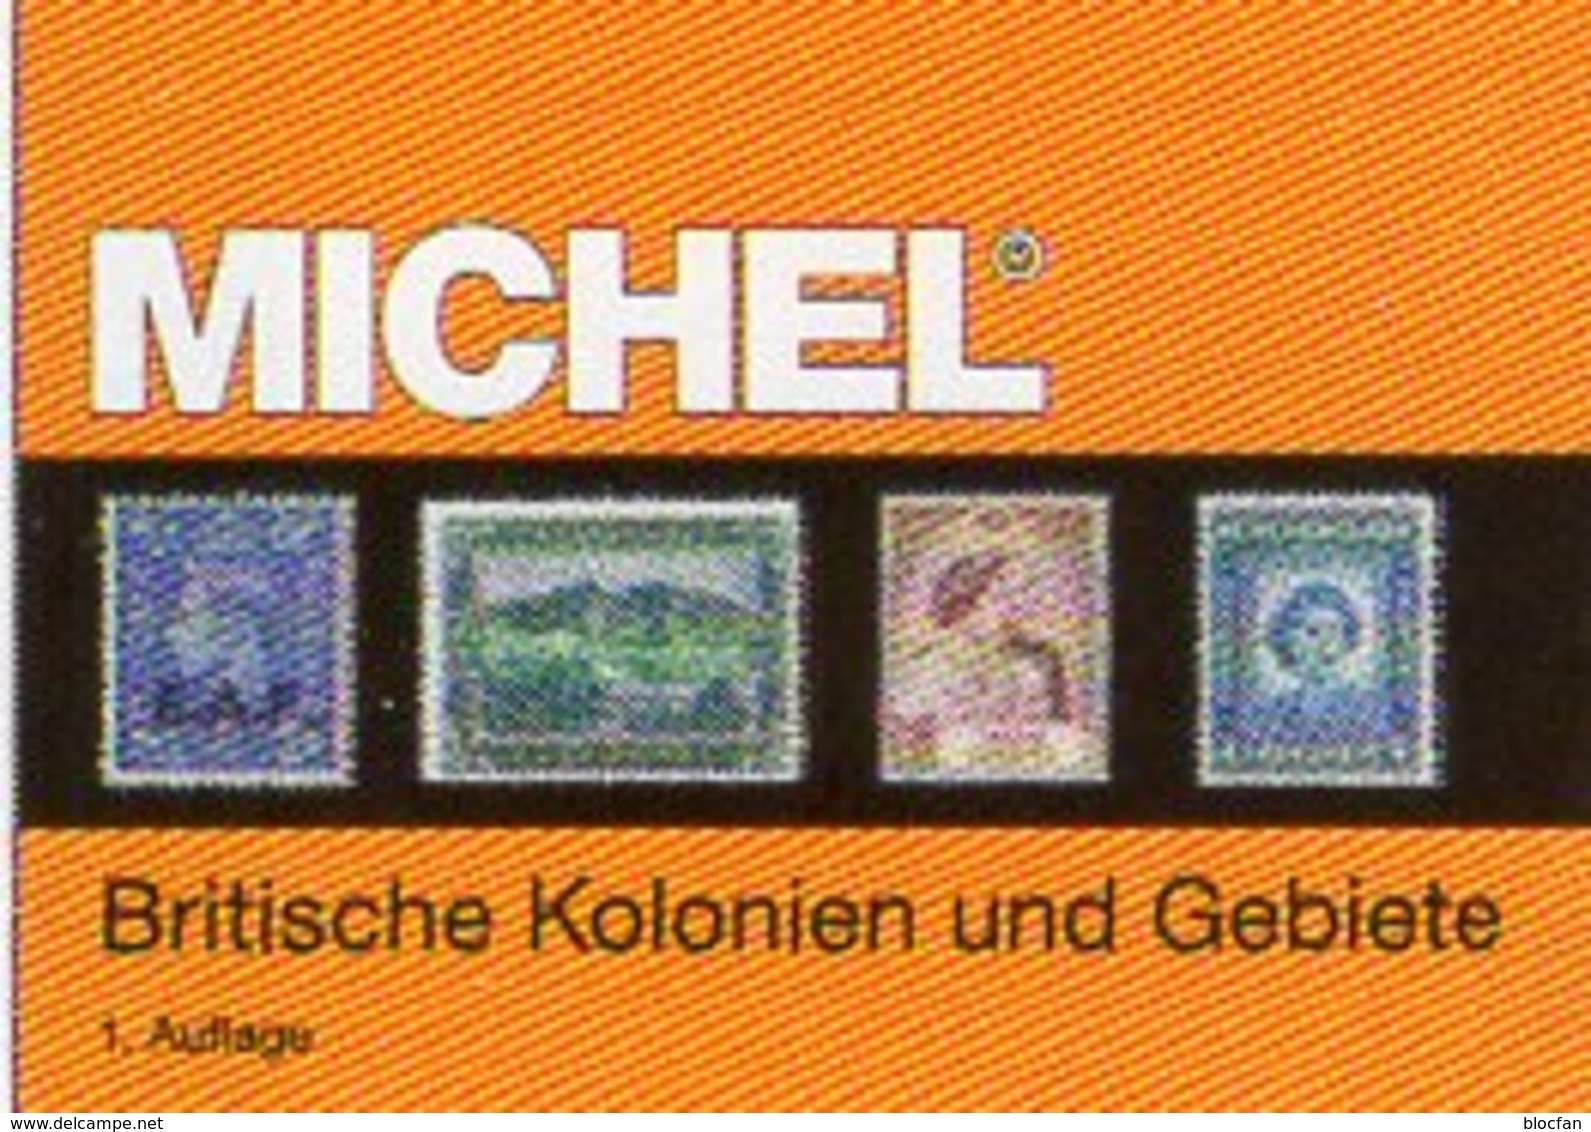 Großbritannien 1 Kolonien A-H MlCHEL 2018 New 89€ Britische Gebiete Stamp Catalogue Of Old UK ISBN978-3-95402-281-6 - Encyclopédies